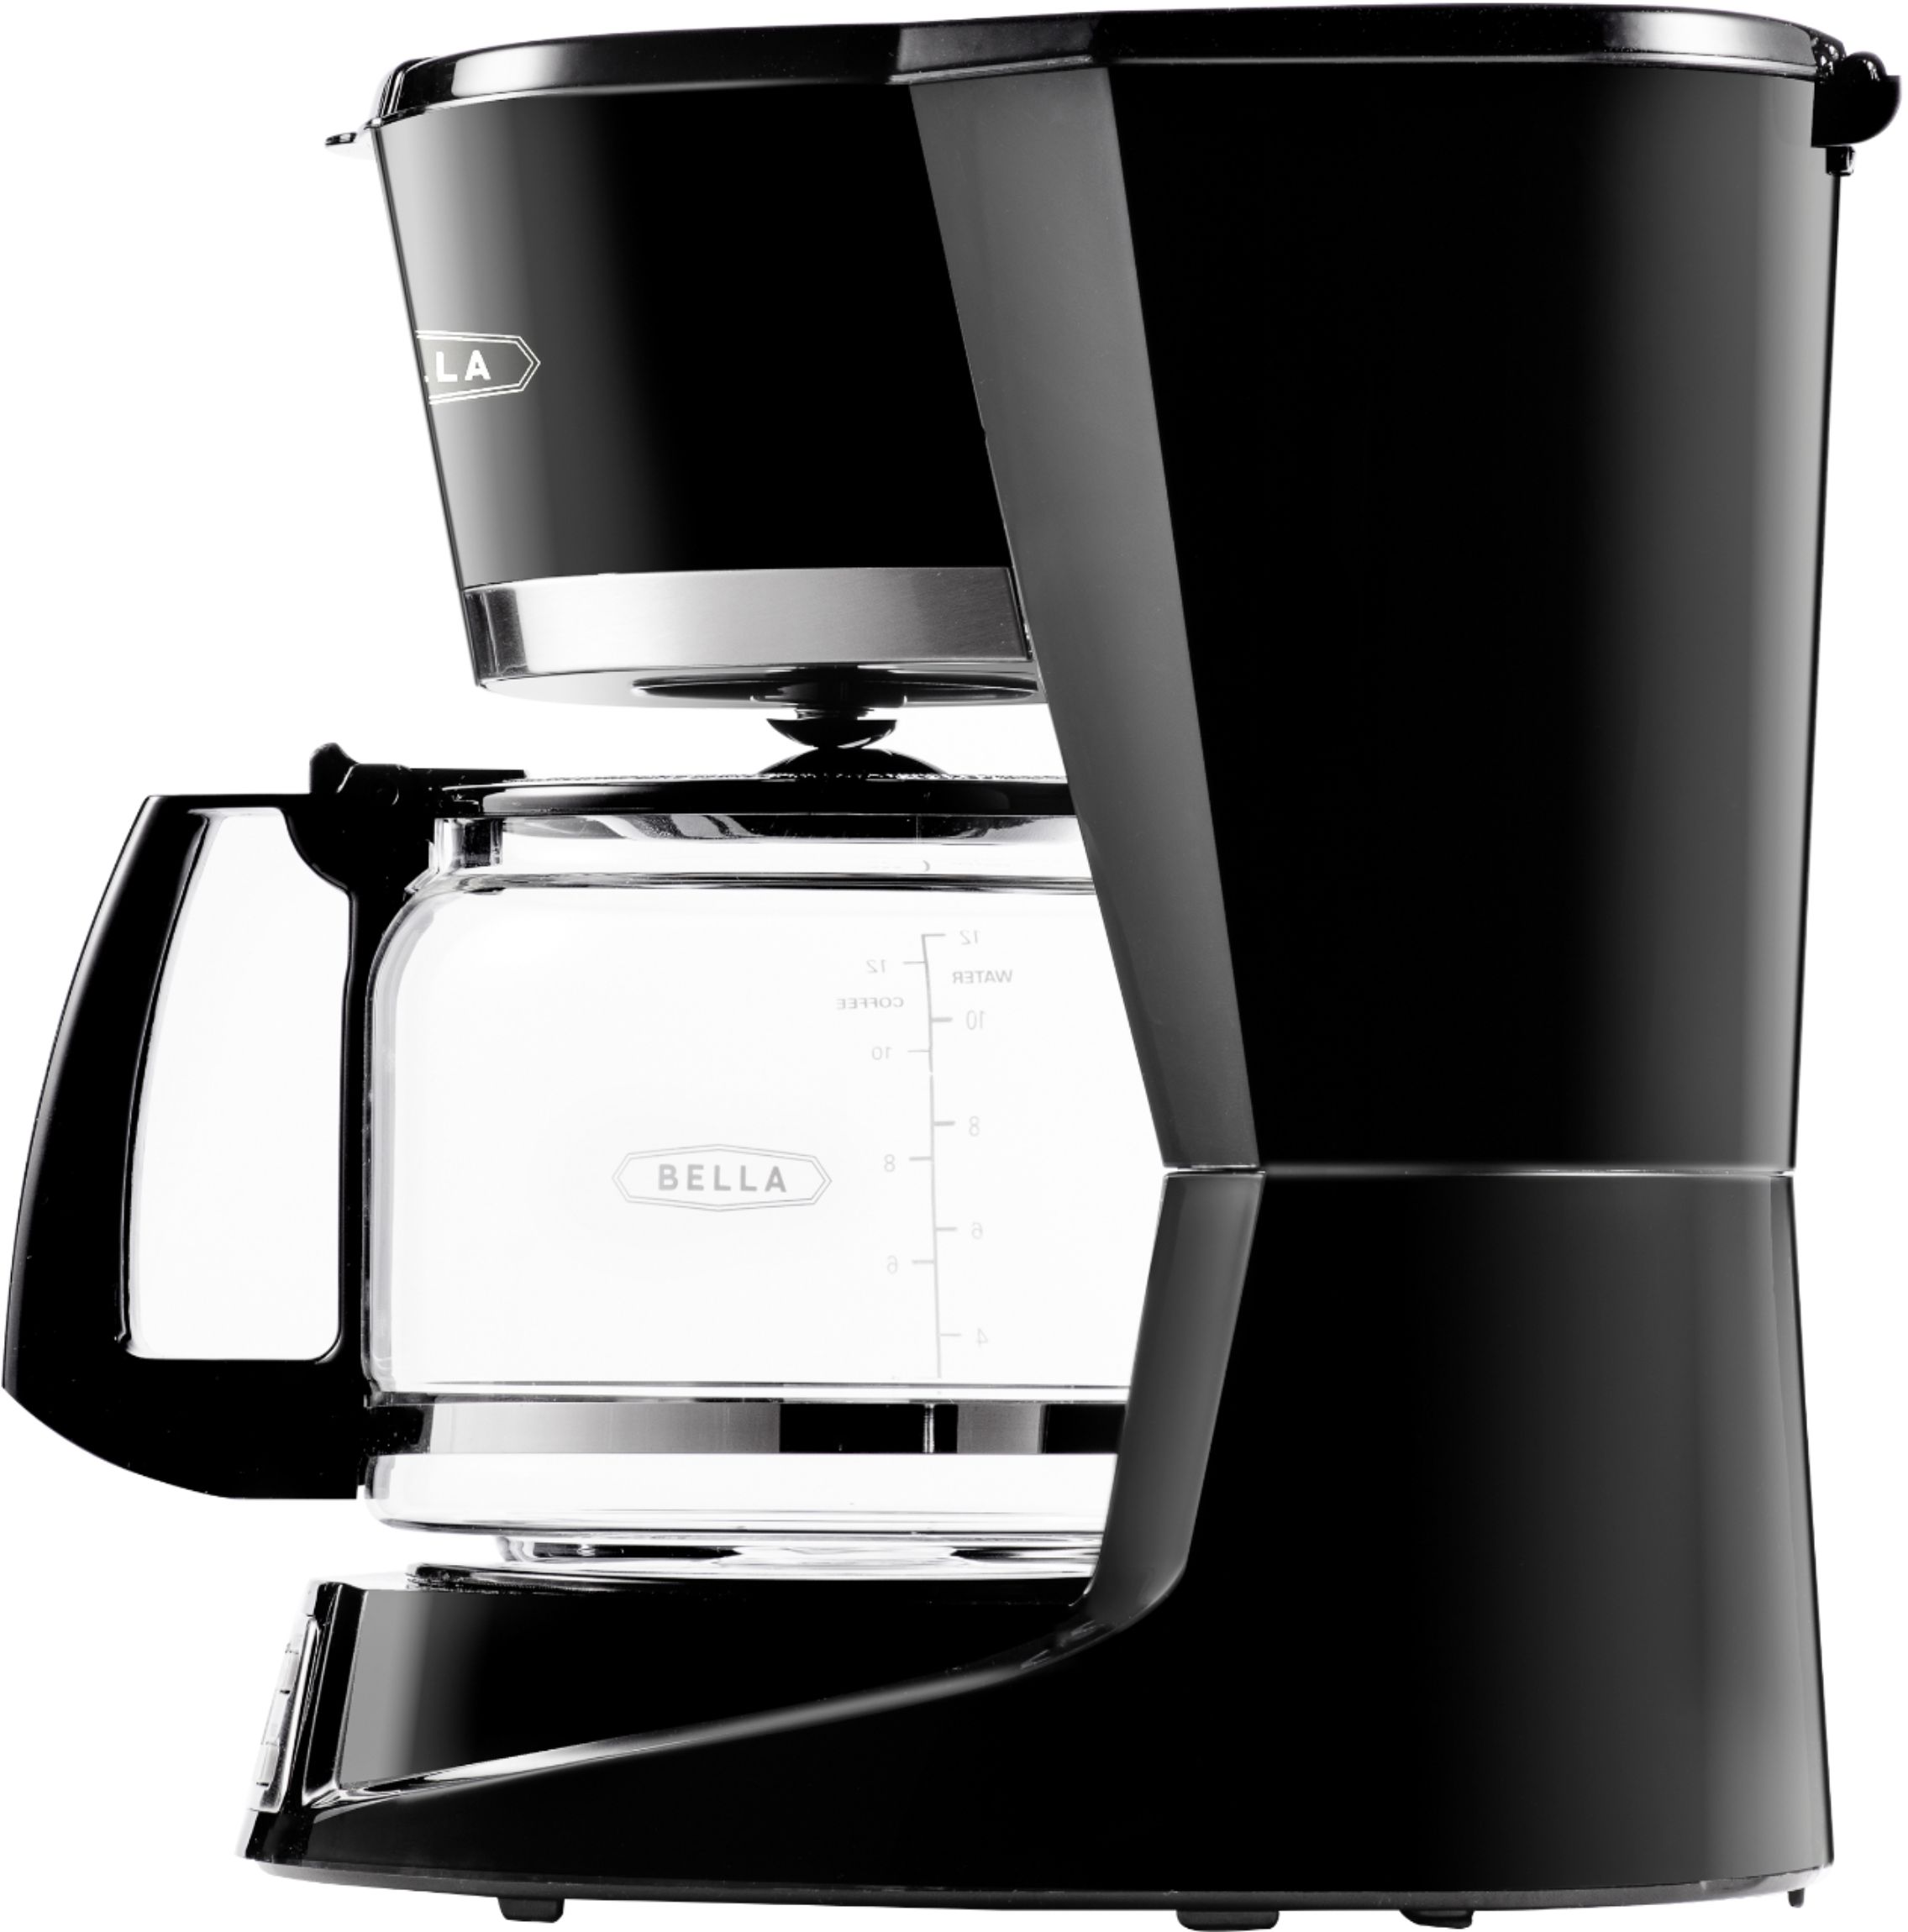 Bella Pro Series Single Serve & 12-Cup Coffee Maker Combo Black 90193 -  Best Buy